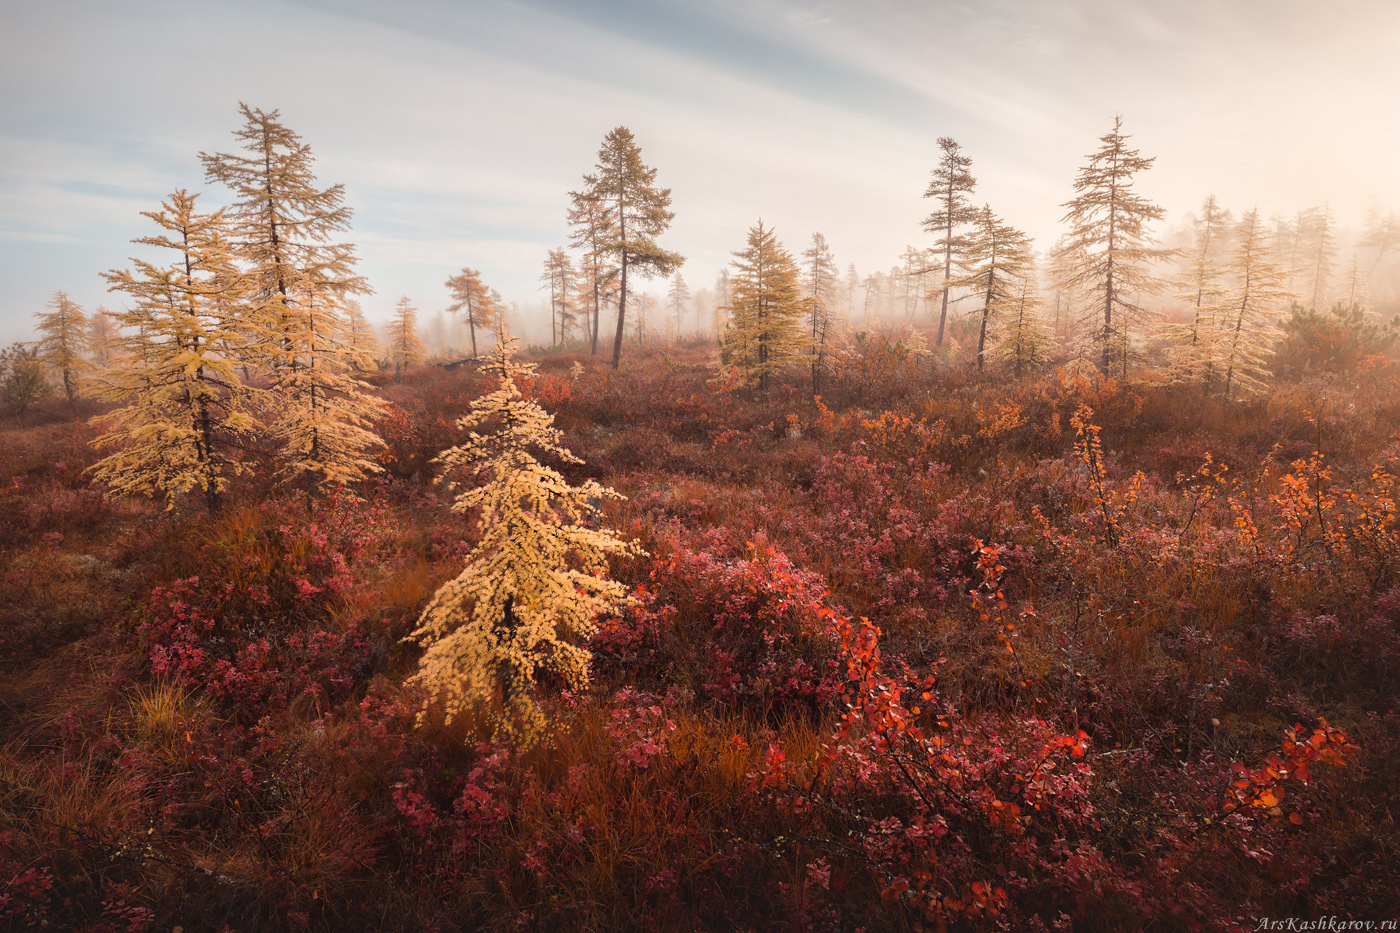 "Голубичная лесотундра" Магаданская область осень краски осени туман голубика лесотундра